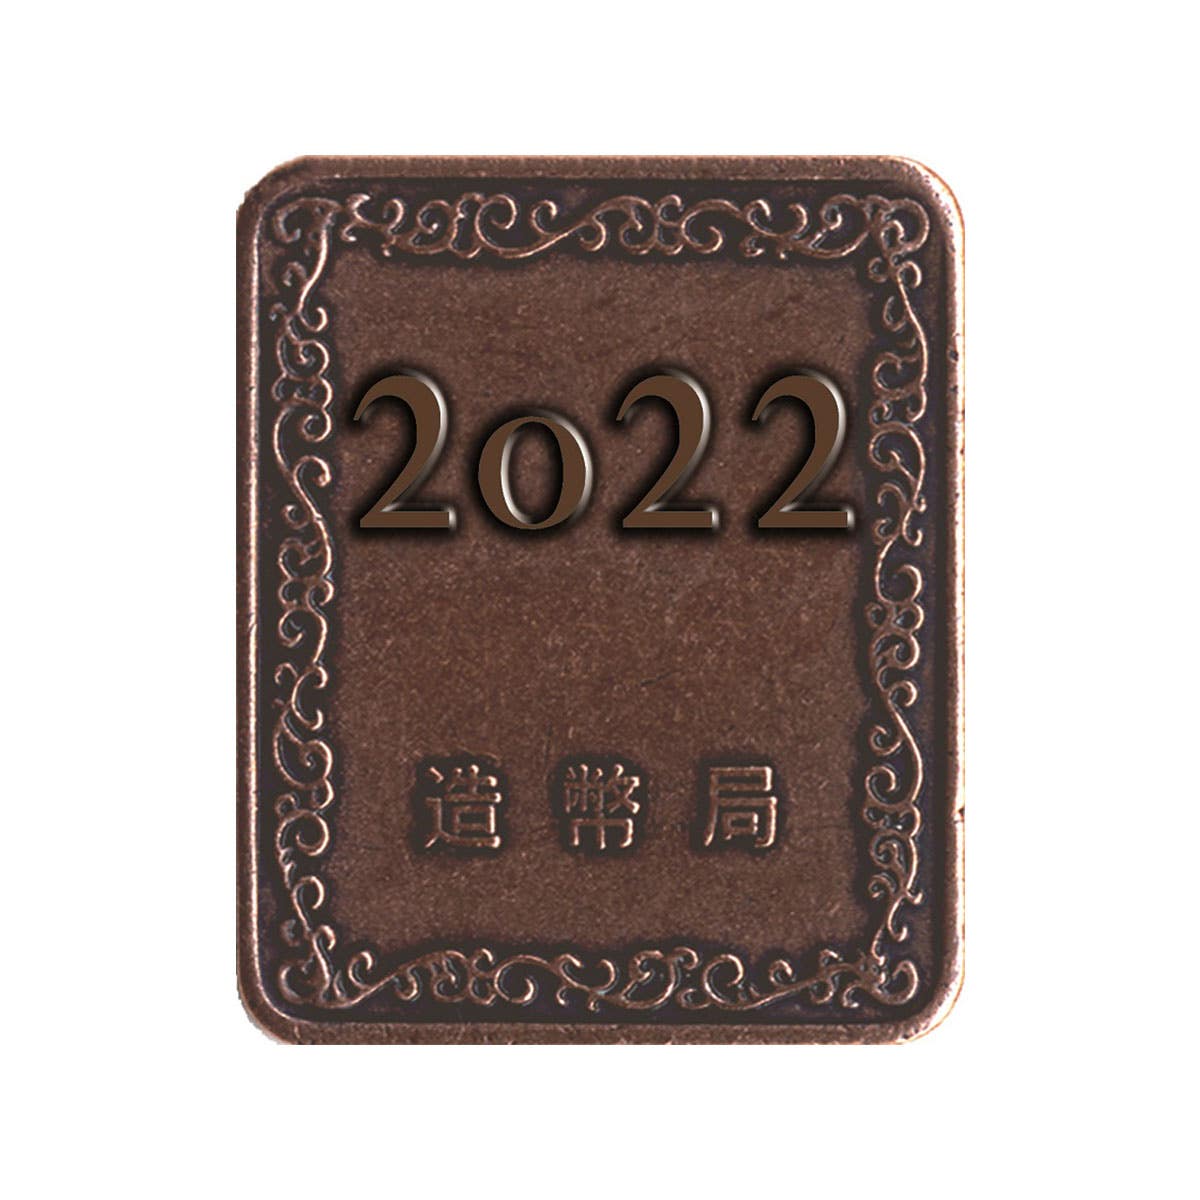 Japan 2022 6-Coin Proof Set